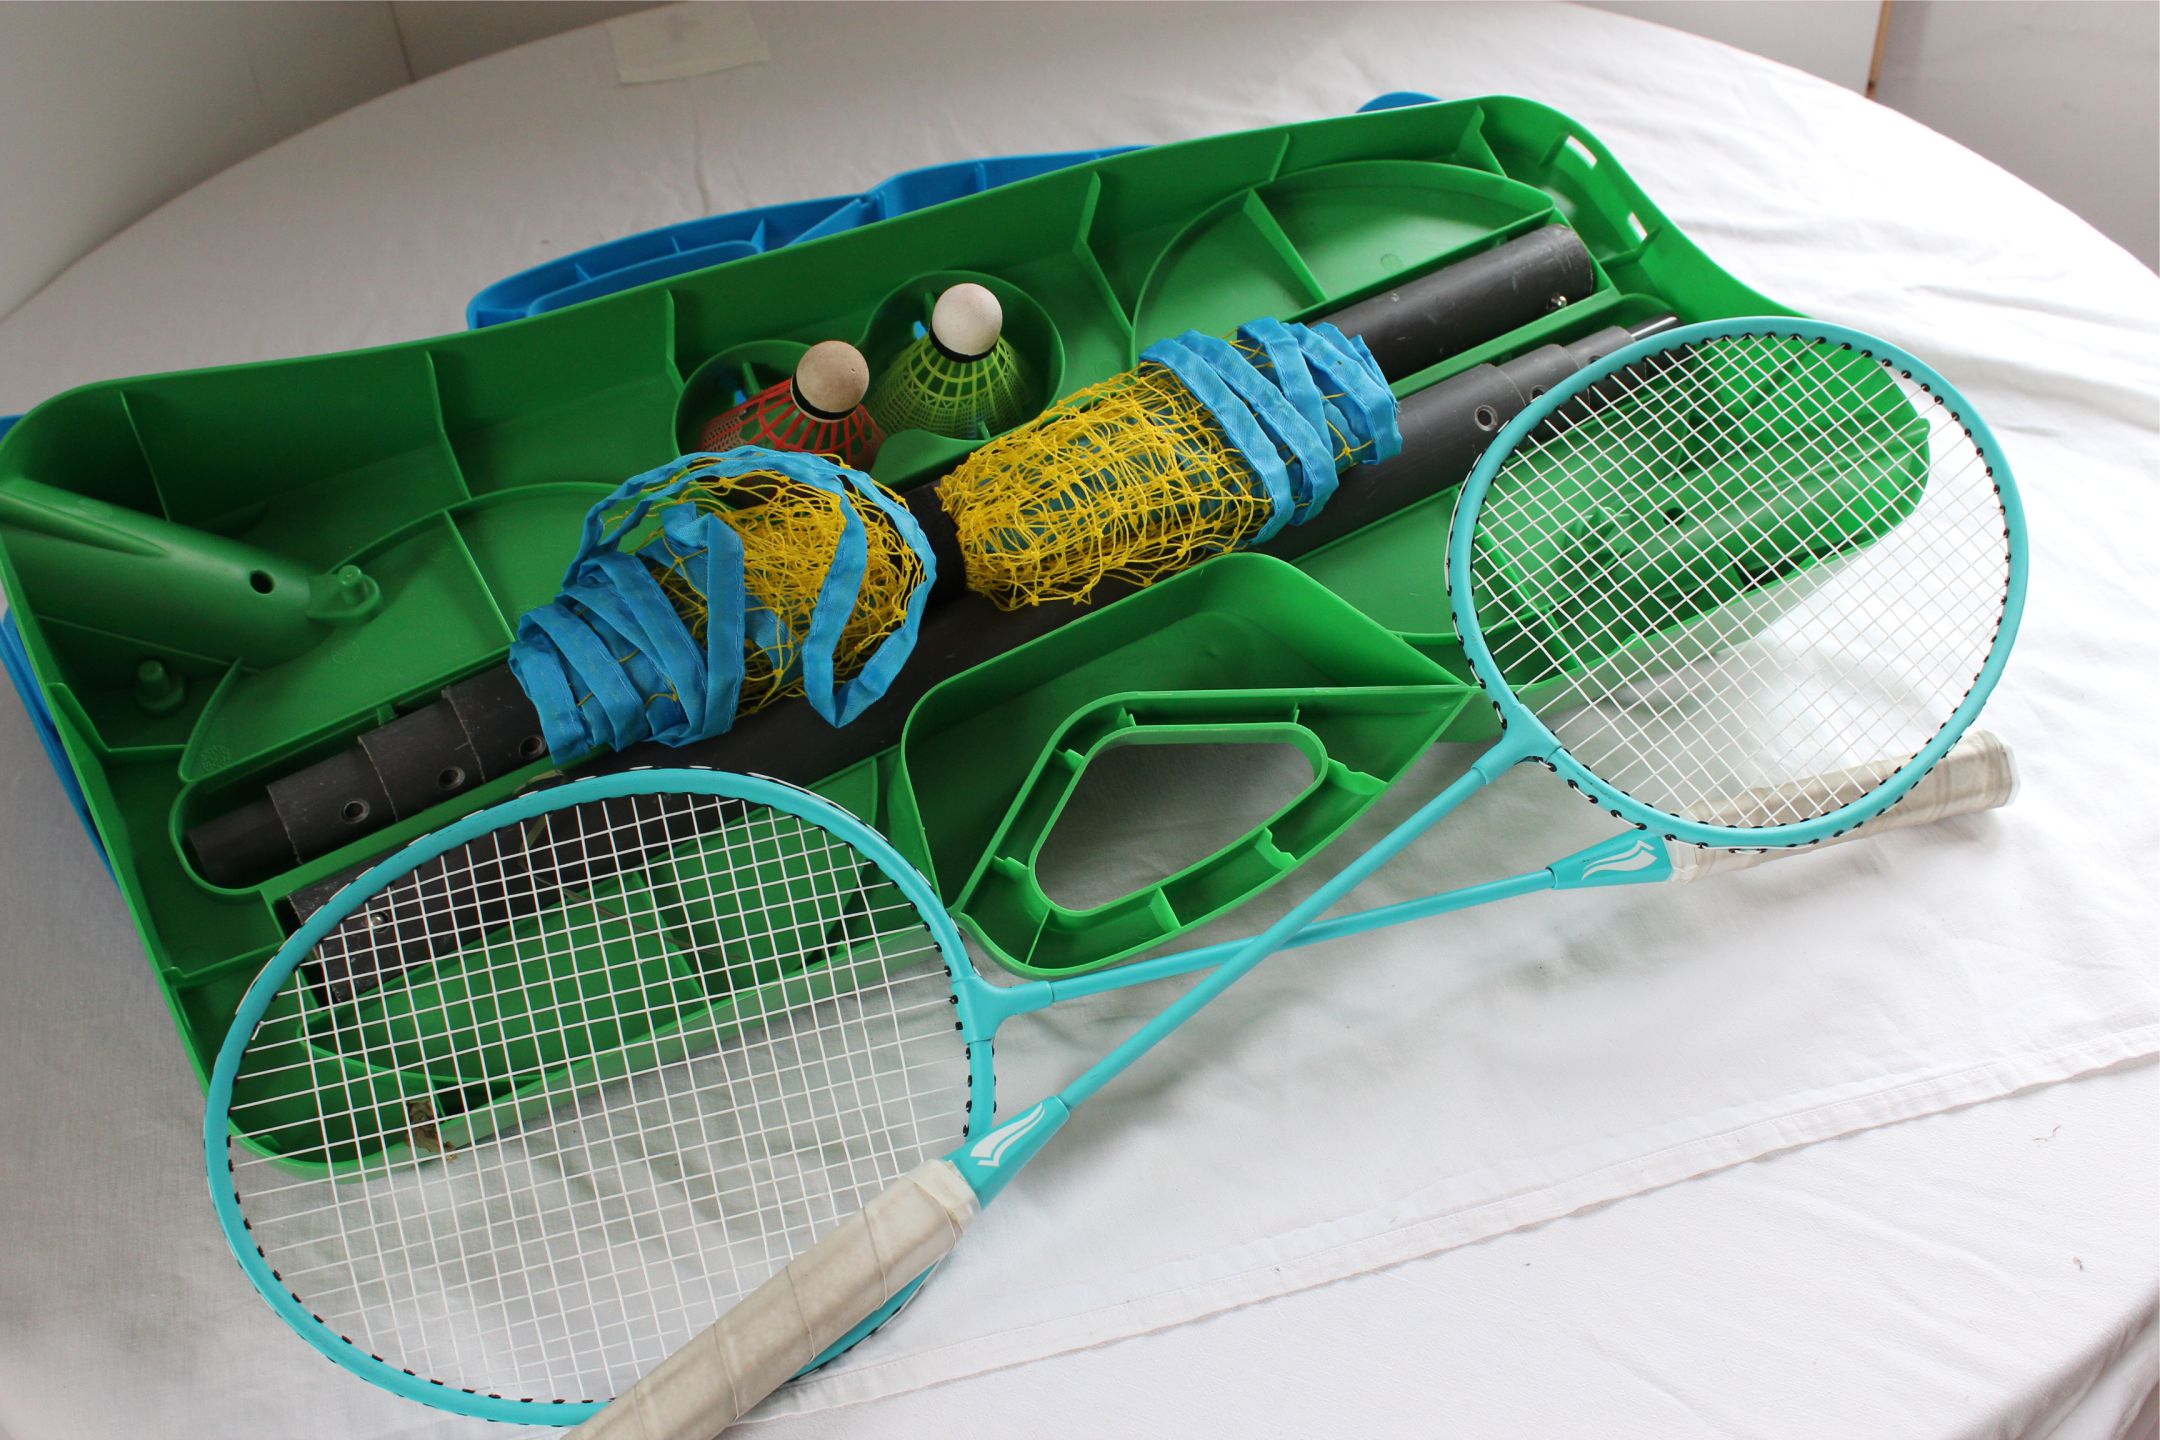  Badminton Set 